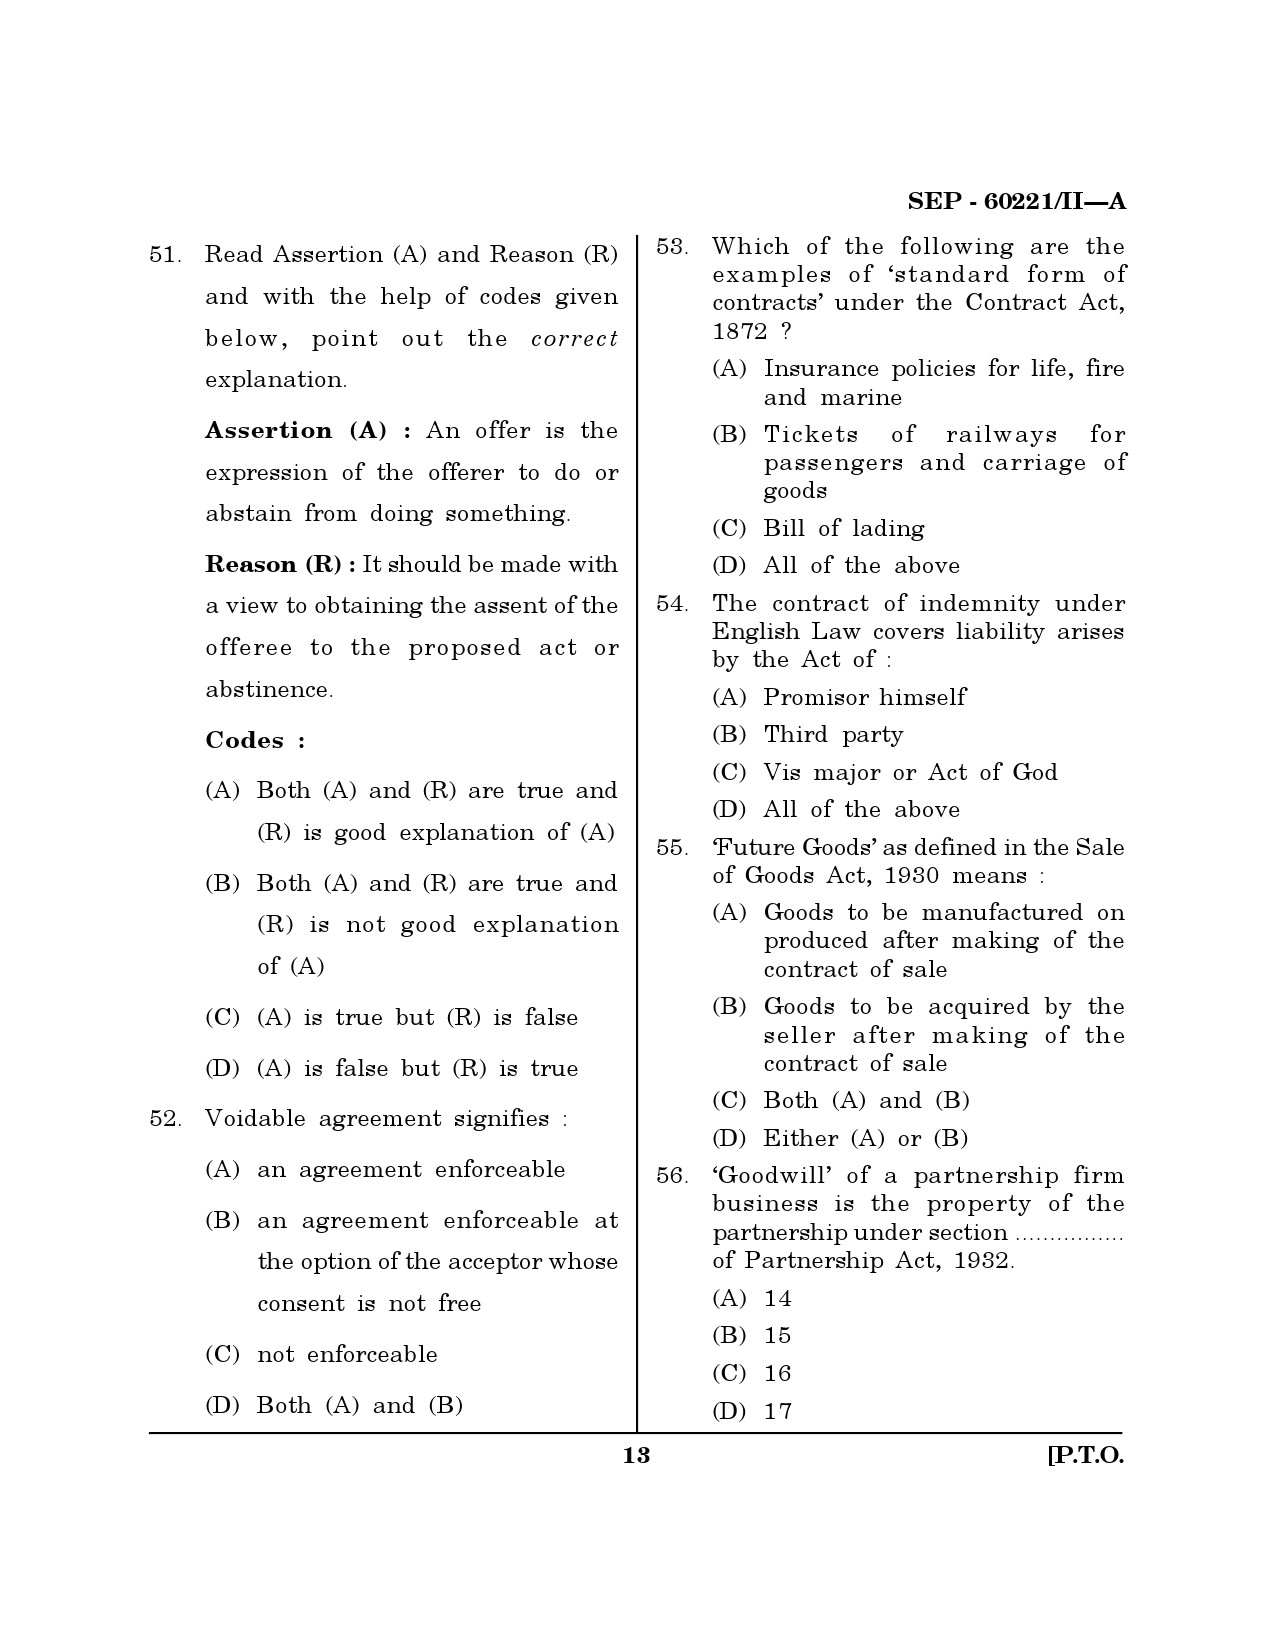 Maharashtra SET Law Exam Question Paper September 2021 12